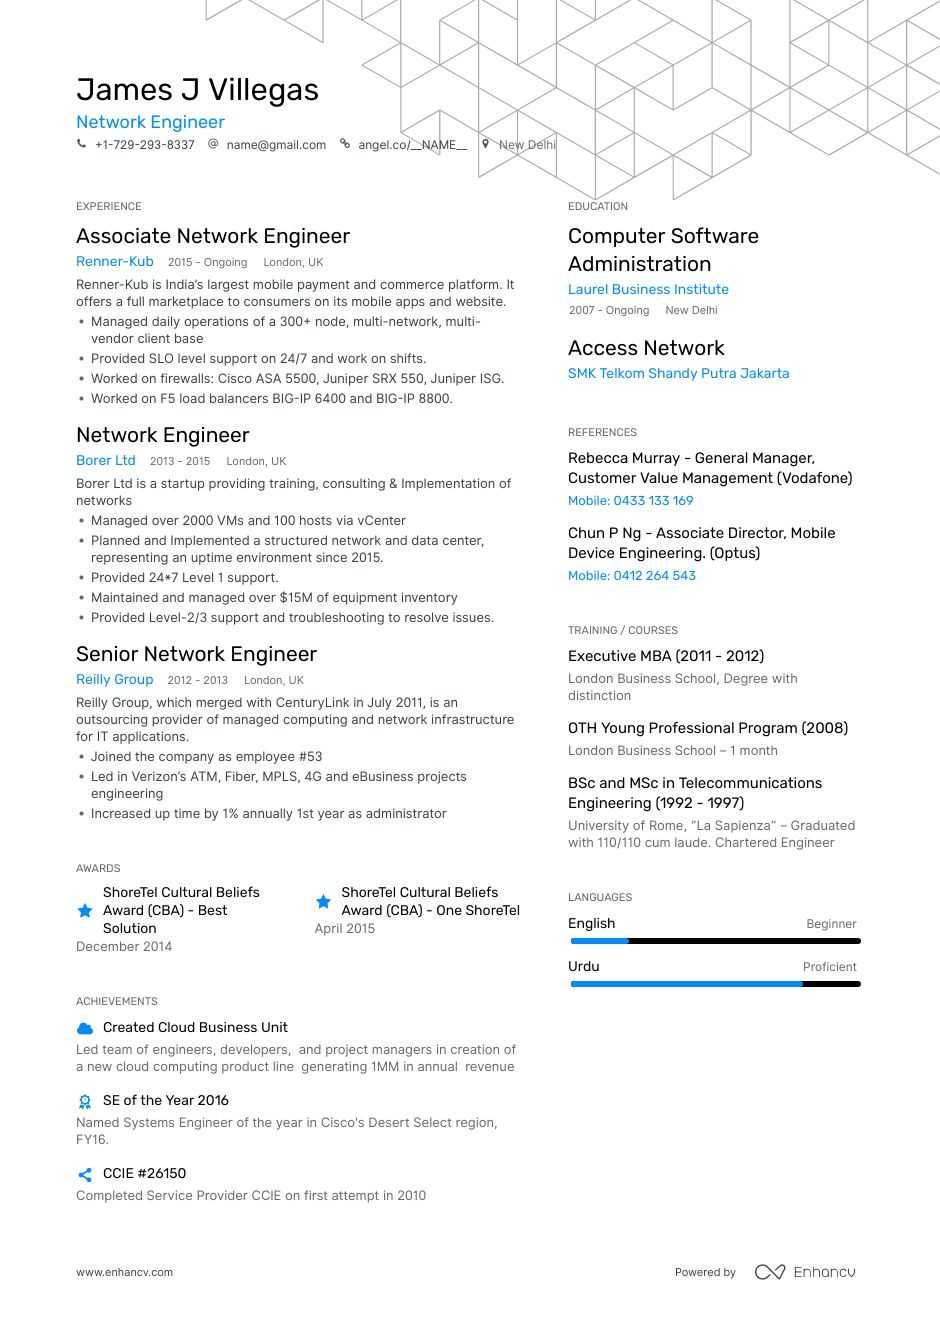 Network Engineer Resume 8 Step Ultimate Guide For 2020 Enhancv